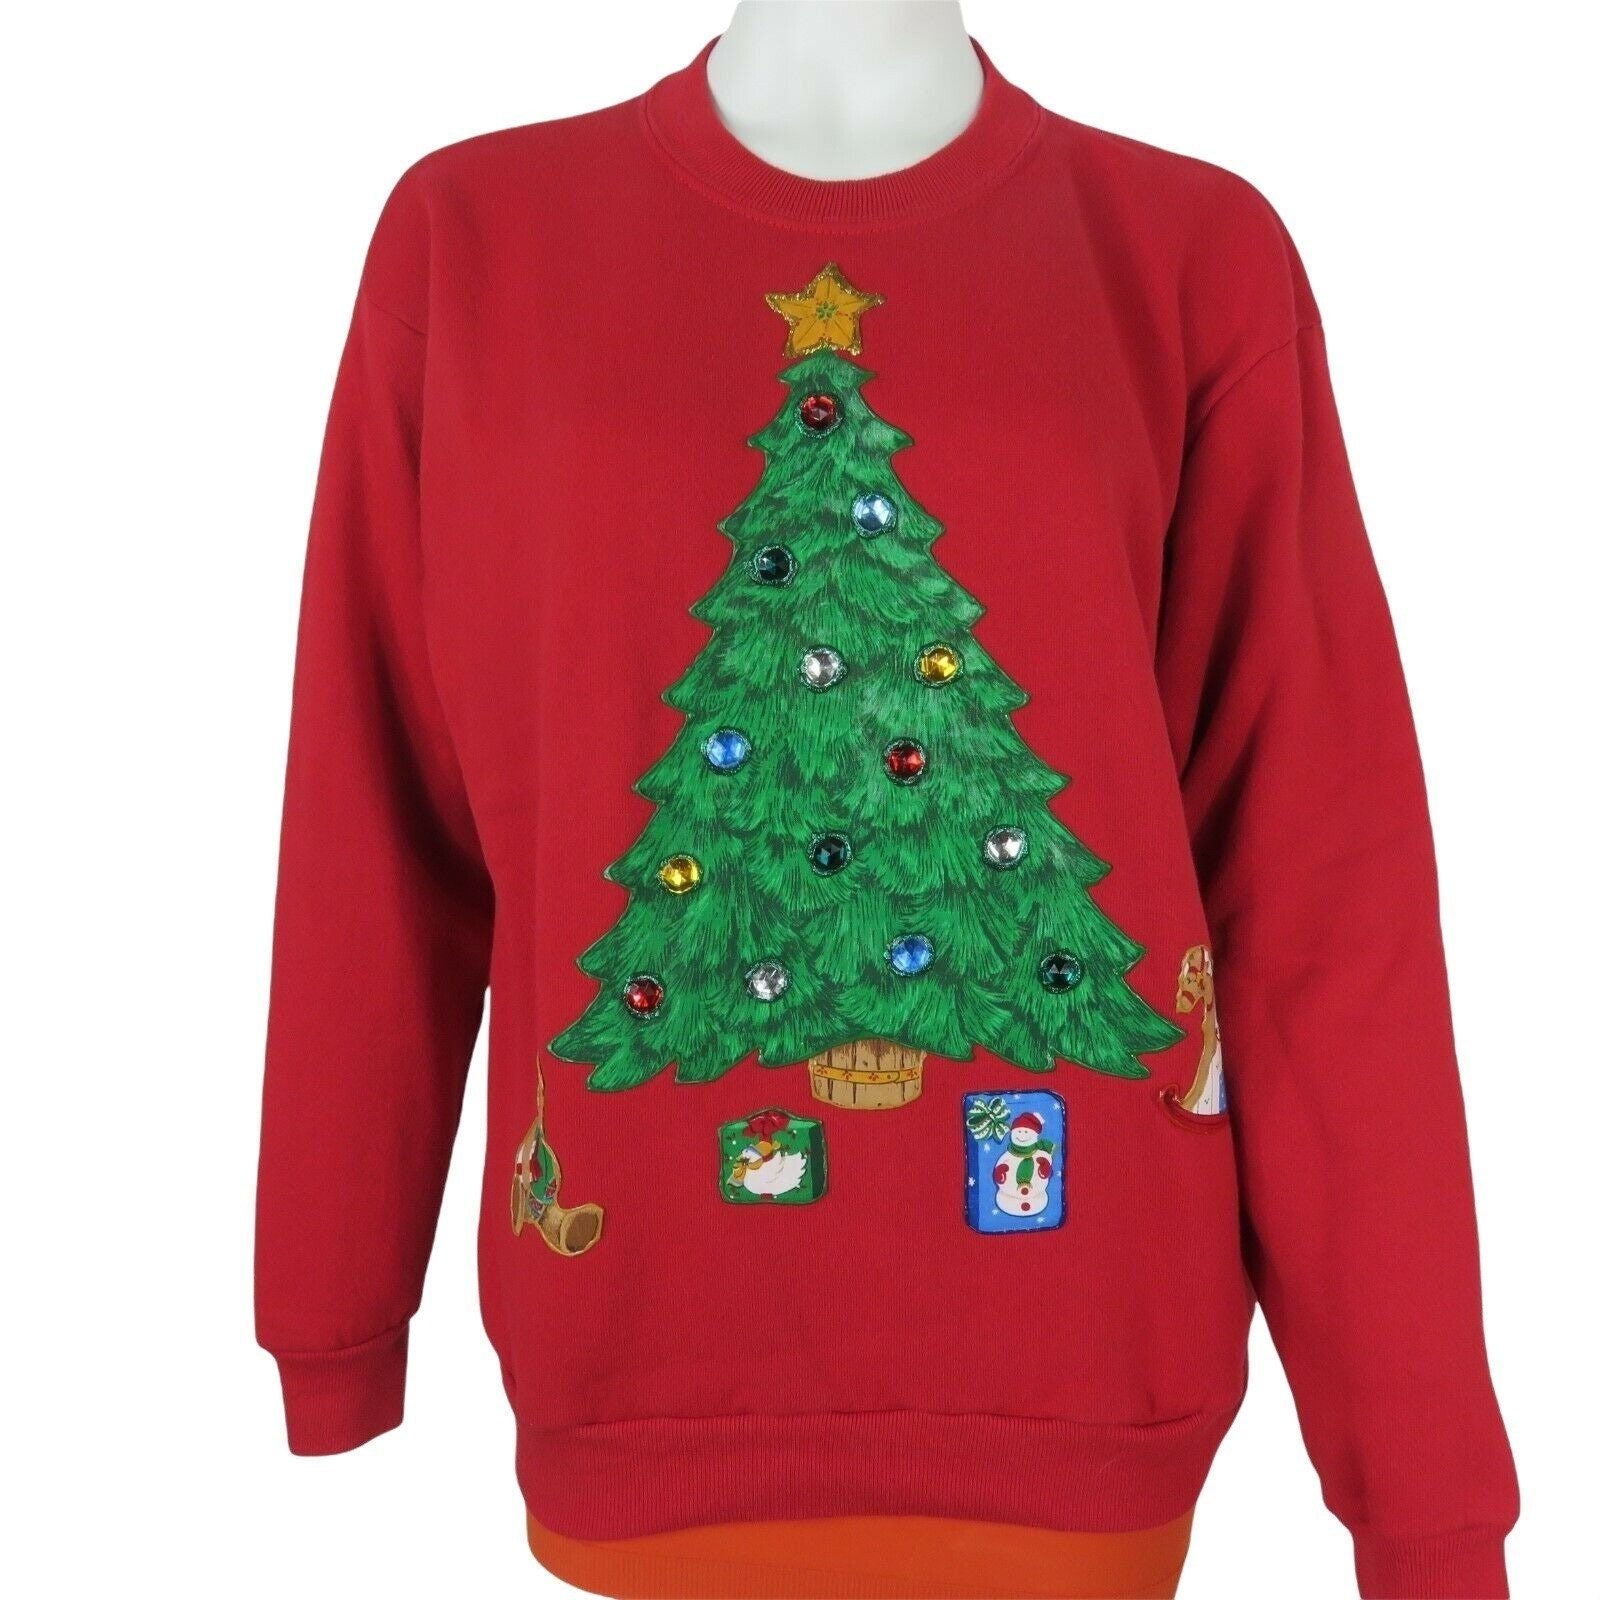 MangoLaundry Vintage 90s Funny Ugly Christmas Sweater Sweatshirt Red Bear 1990s Grunge Retro Cute BINAC